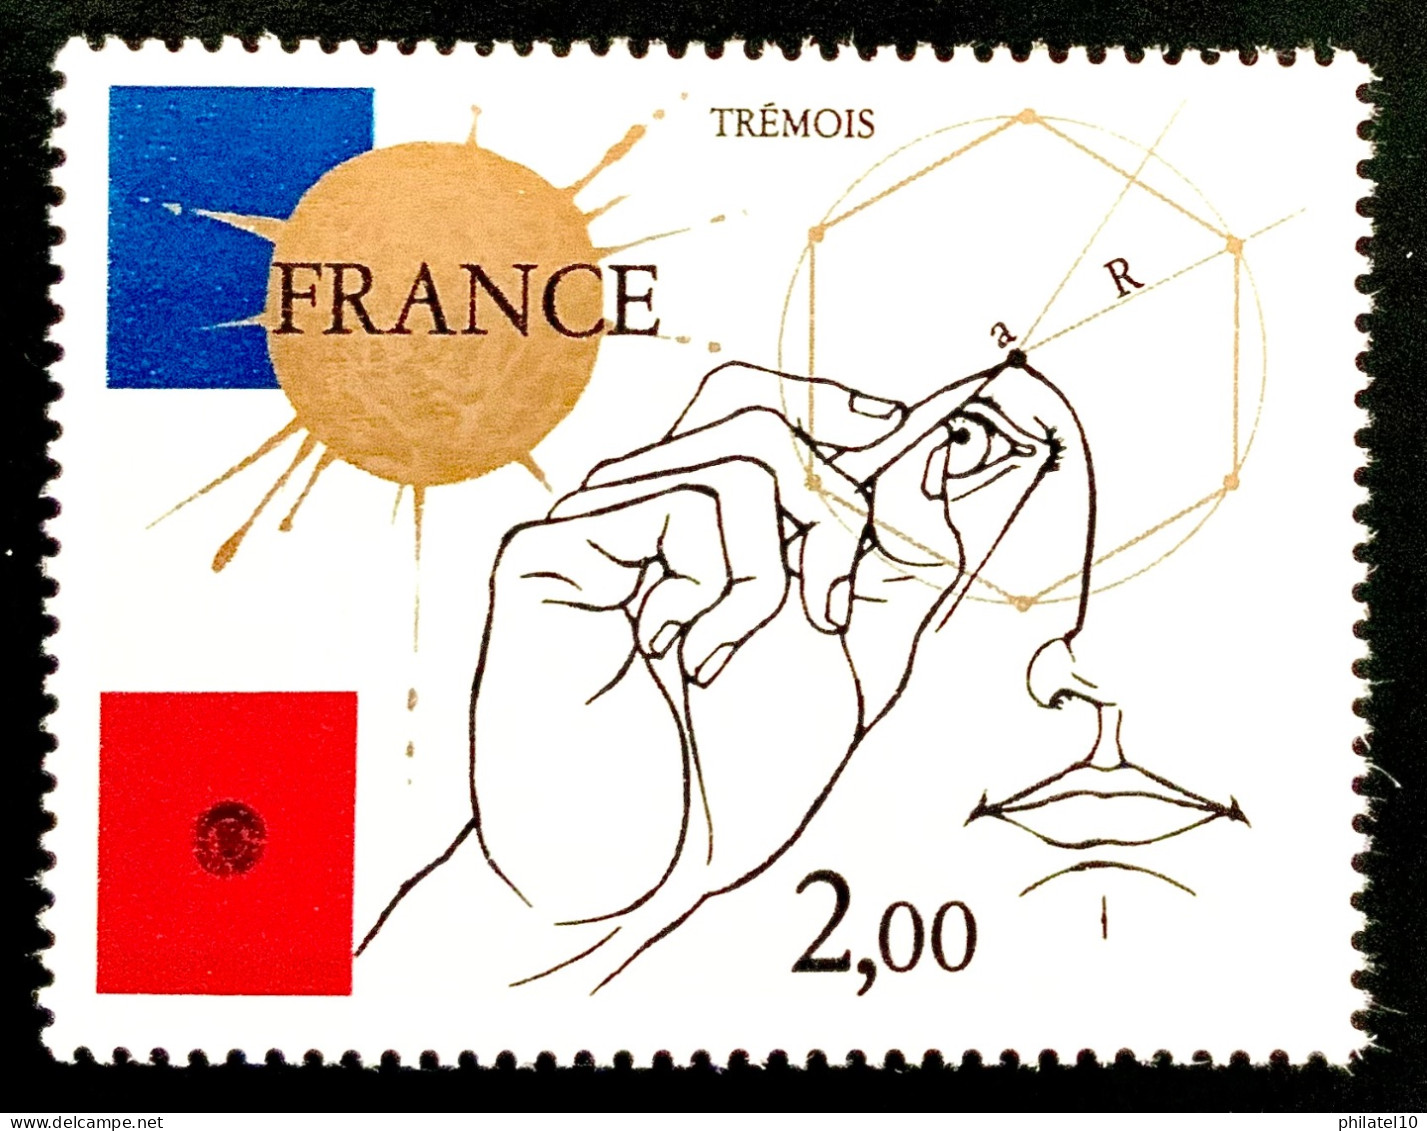 1981 FRANCE N 2141 TREMOIS 2,00F - NEUF** - Ungebraucht